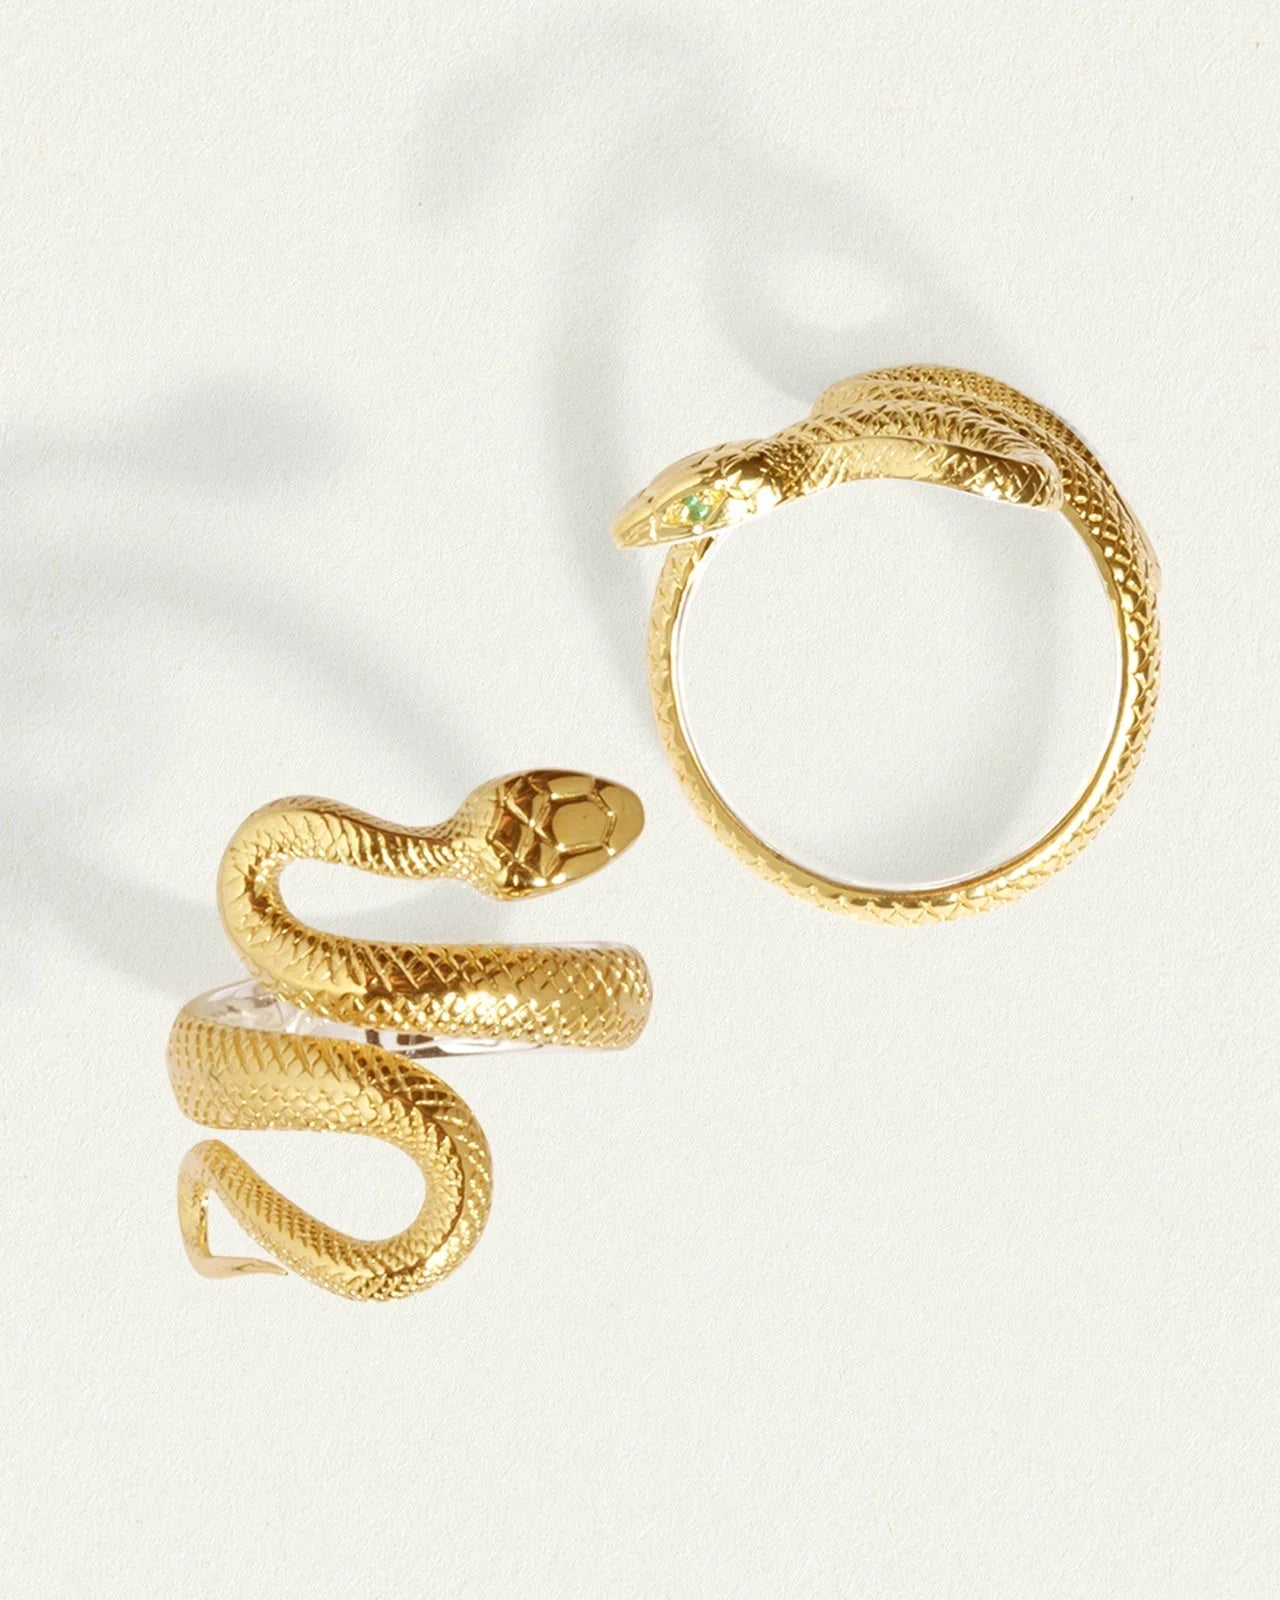 Serpent ring - Gold vermeil - Size 7